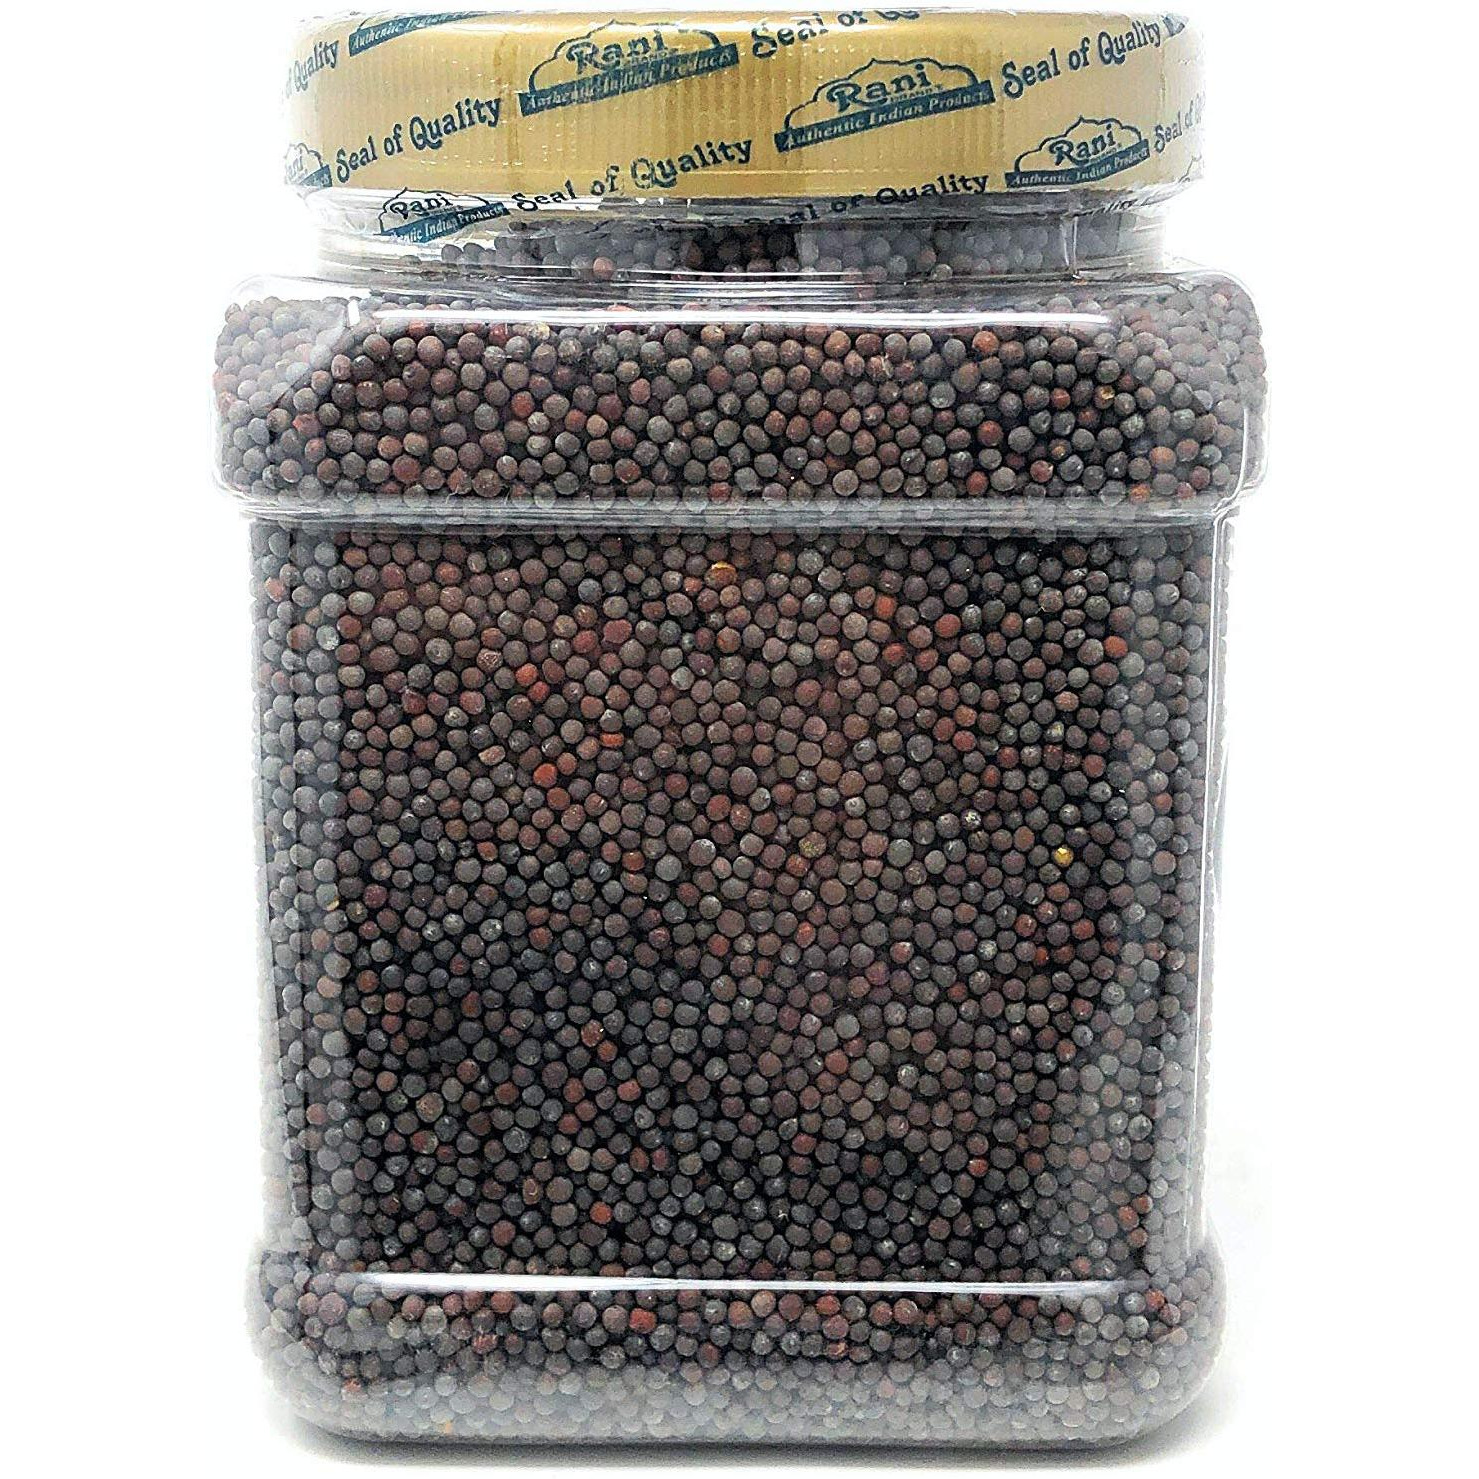 Rani Mustard Seeds 20oz (567g)